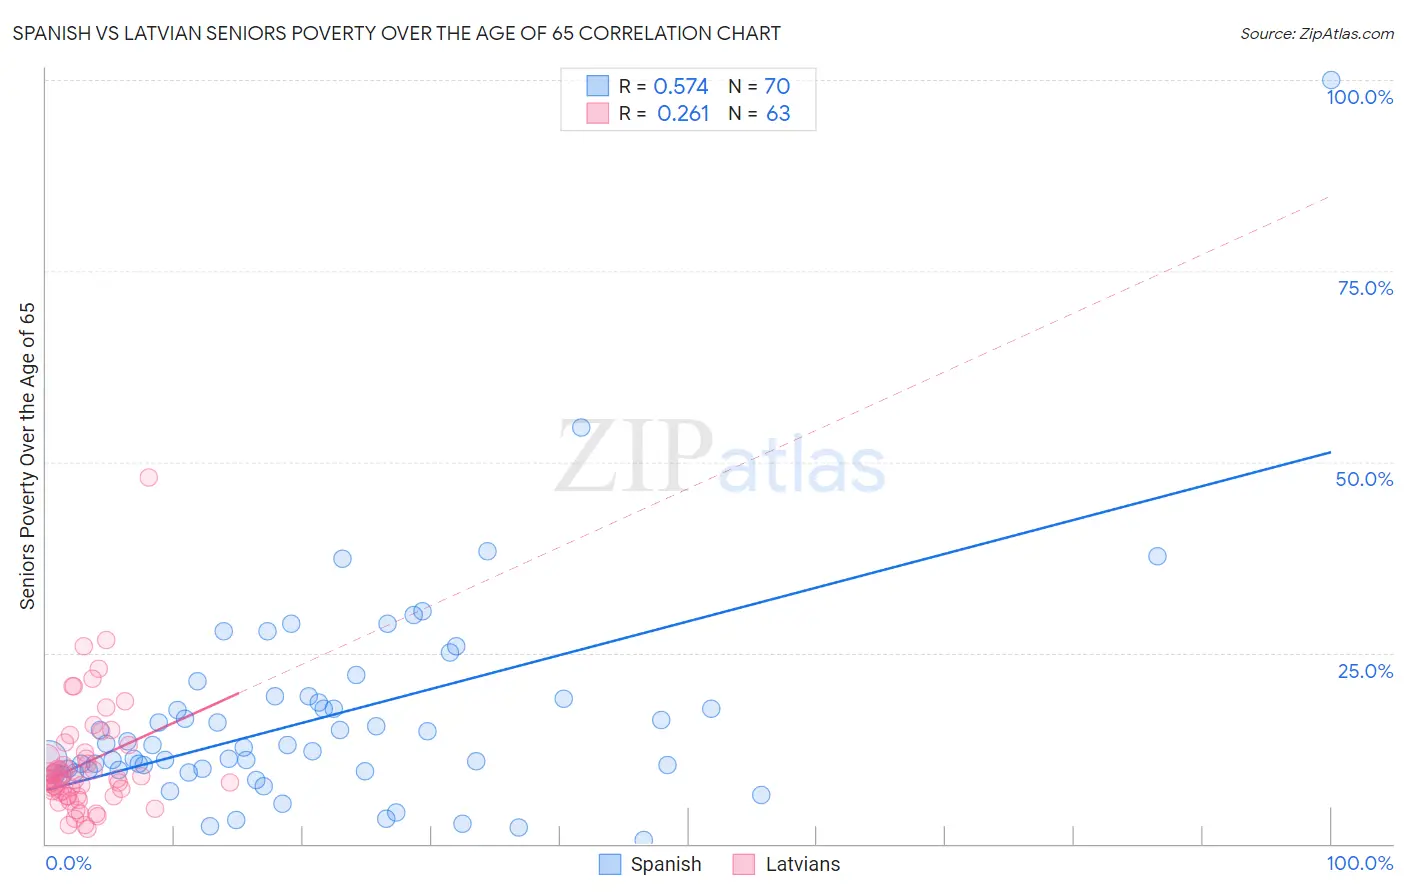 Spanish vs Latvian Seniors Poverty Over the Age of 65